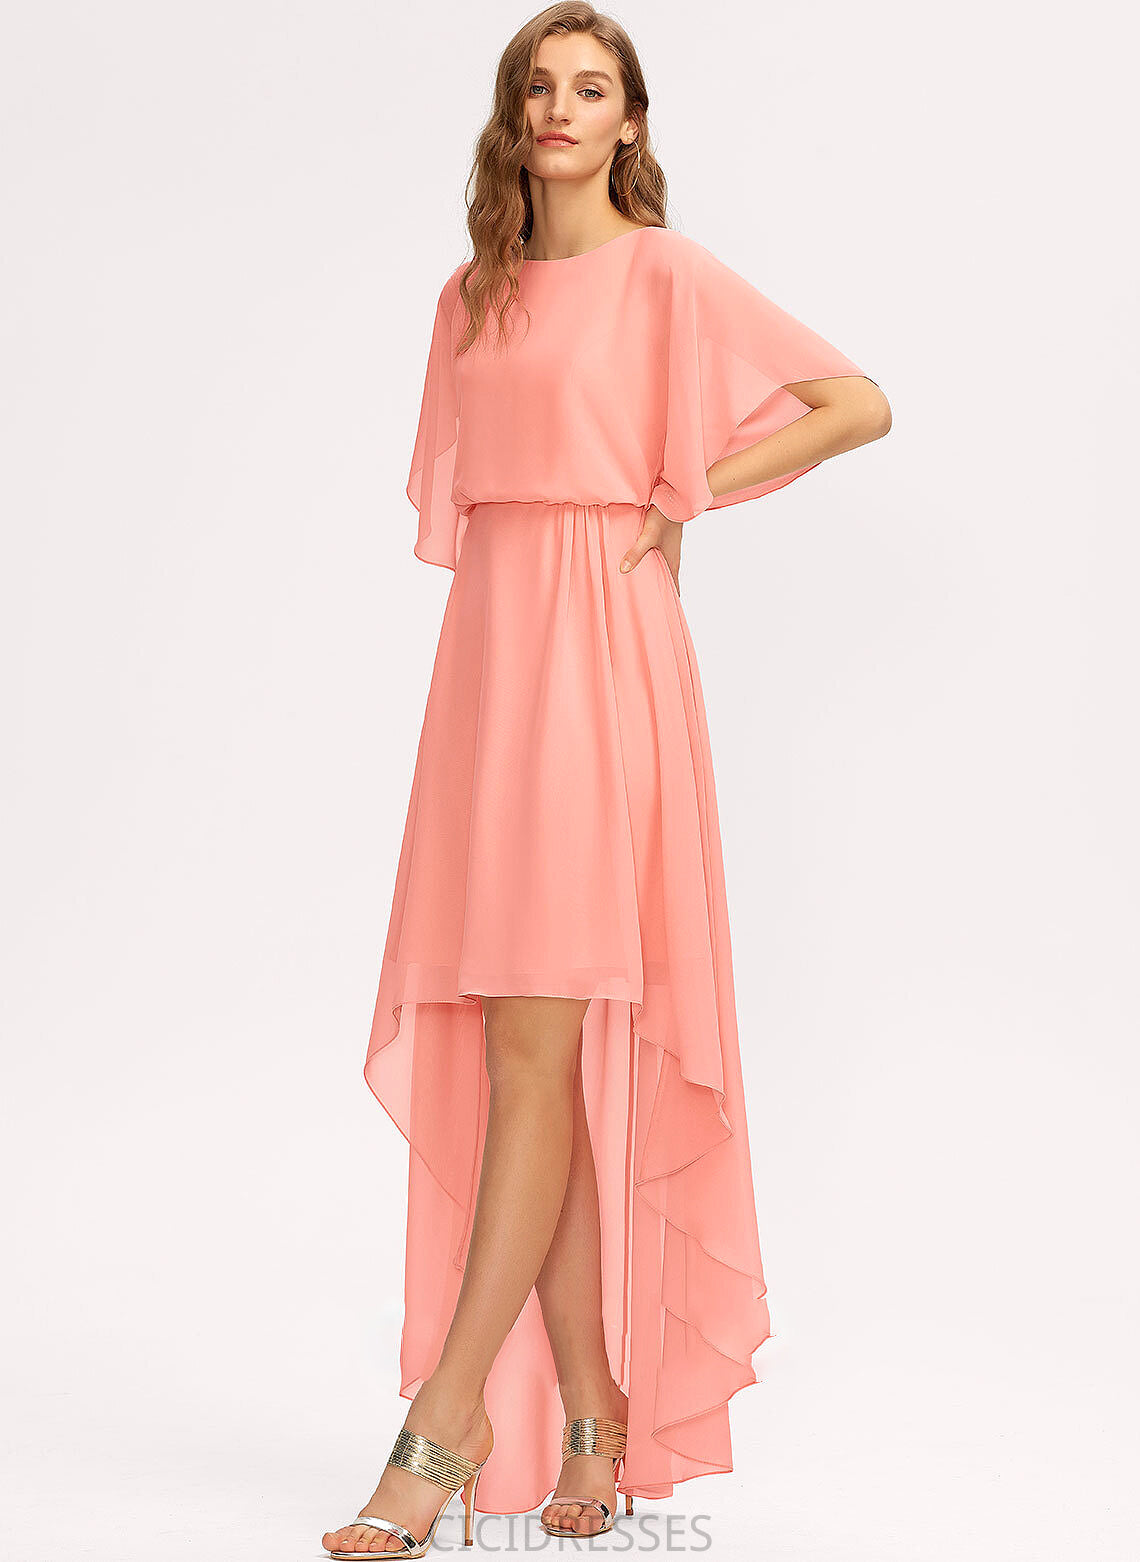 ScoopNeck Fabric Asymmetrical Neckline A-Line Silhouette Length Straps Aiyana Sleeveless Natural Waist Spaghetti Staps Bridesmaid Dresses